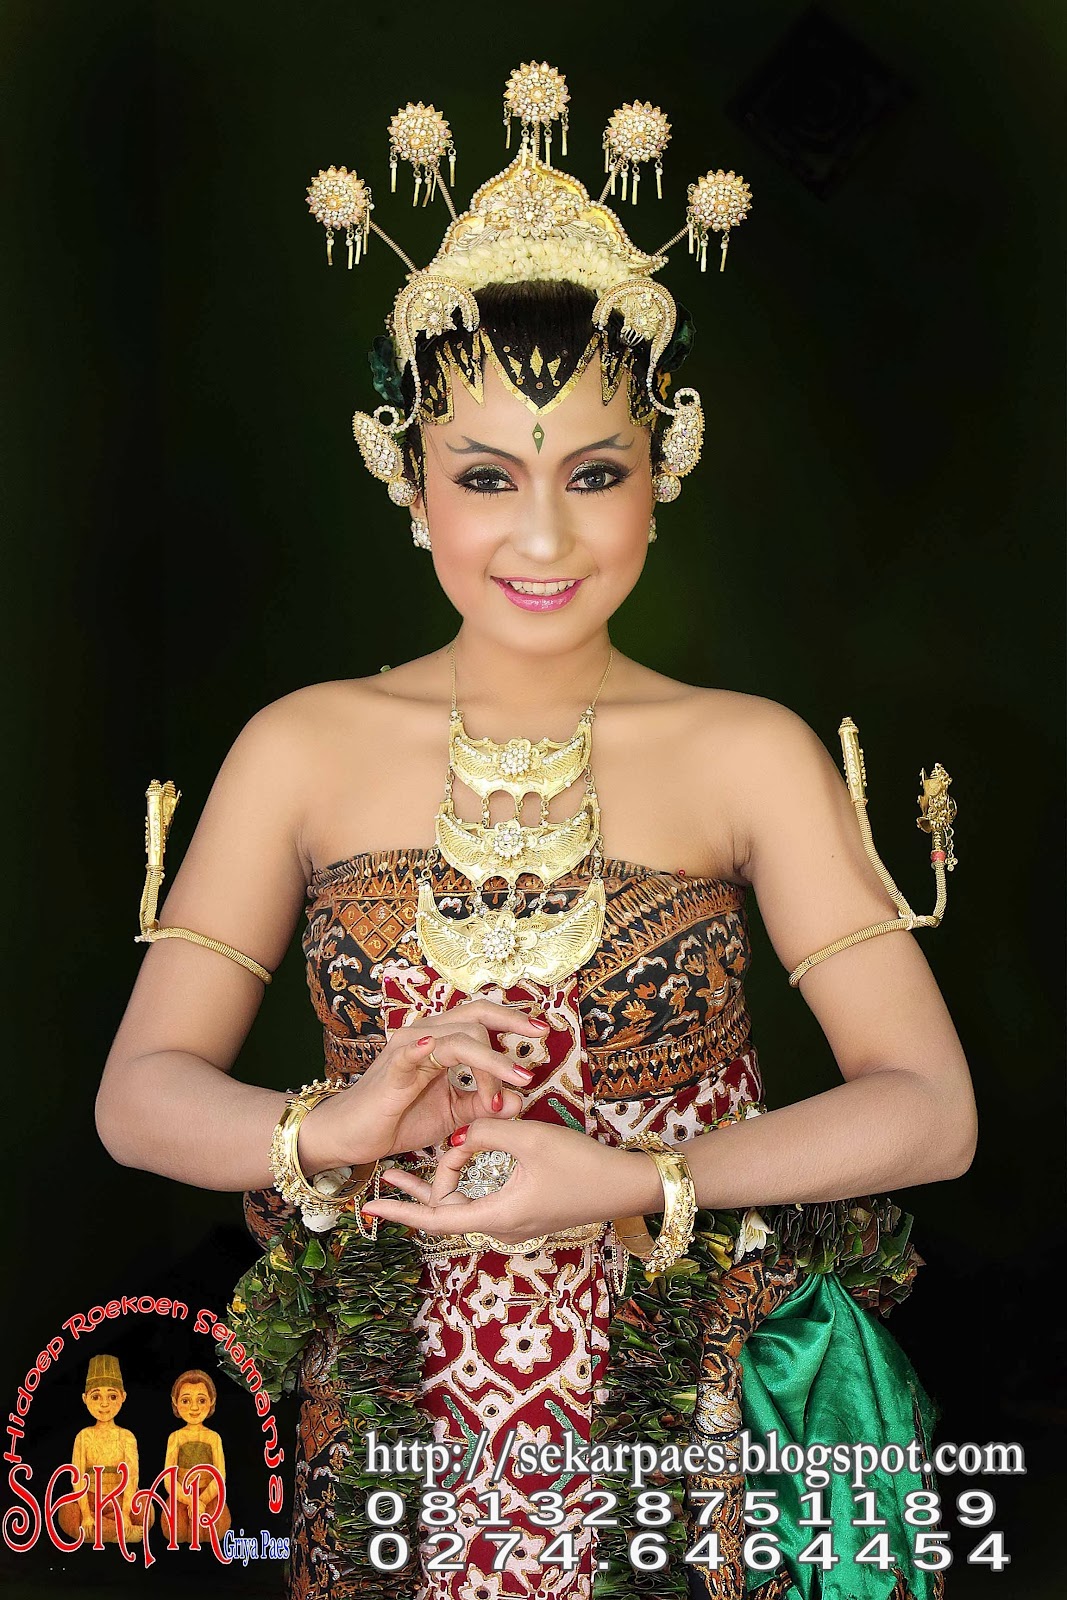 Photo Pernikahan Adat Yogyakarta Album Wedding